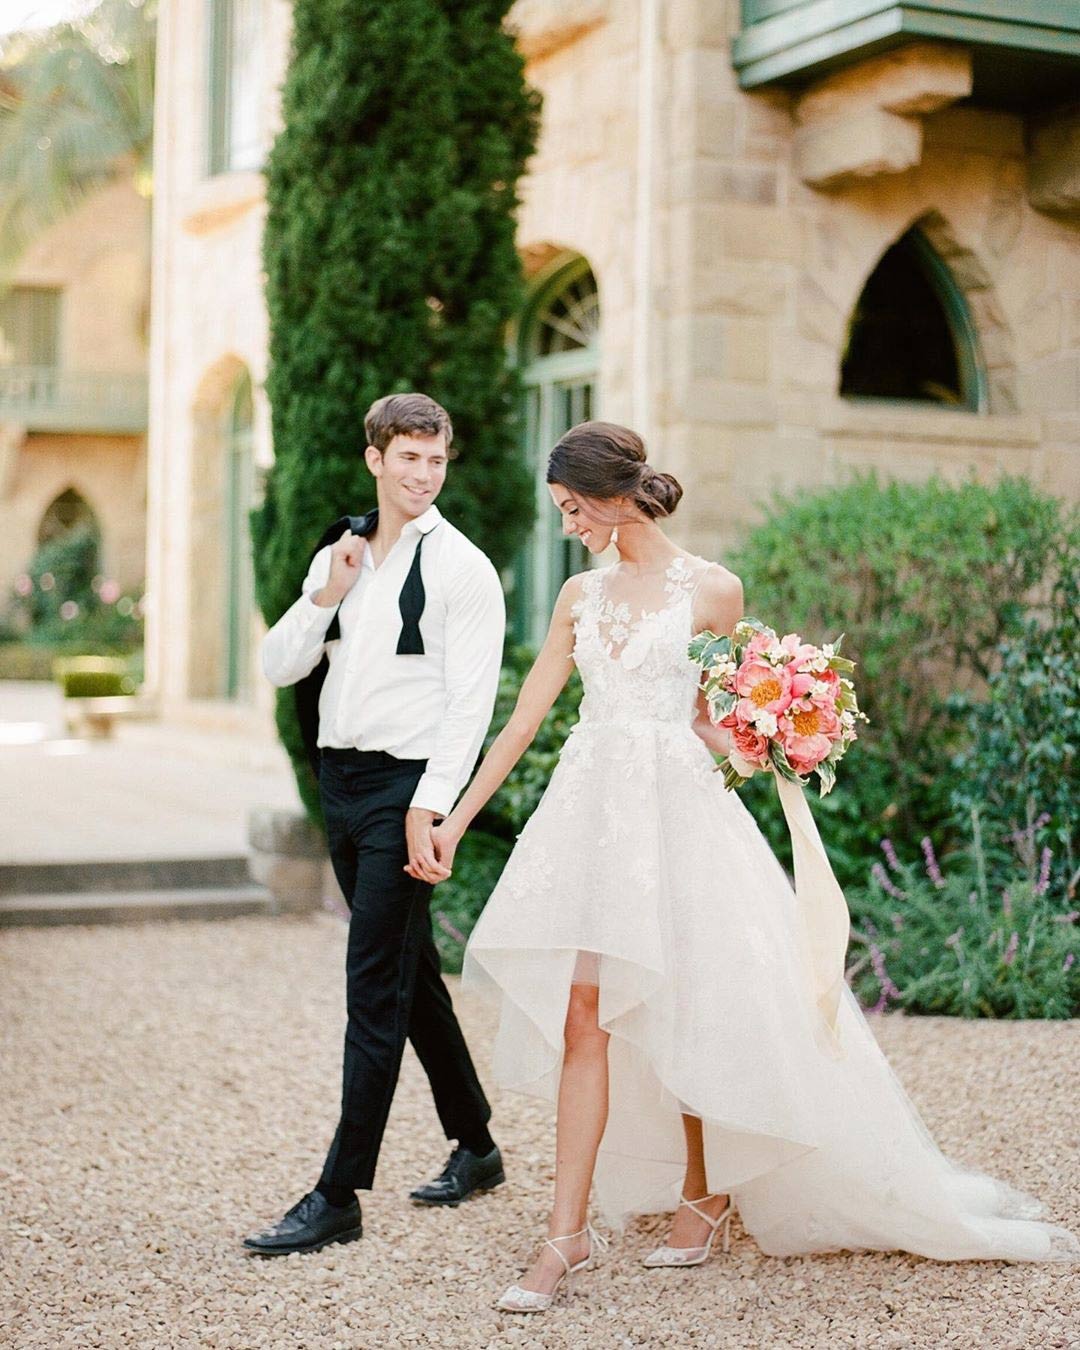 ms vs mrs vs miss bride groom bouquet dress lace